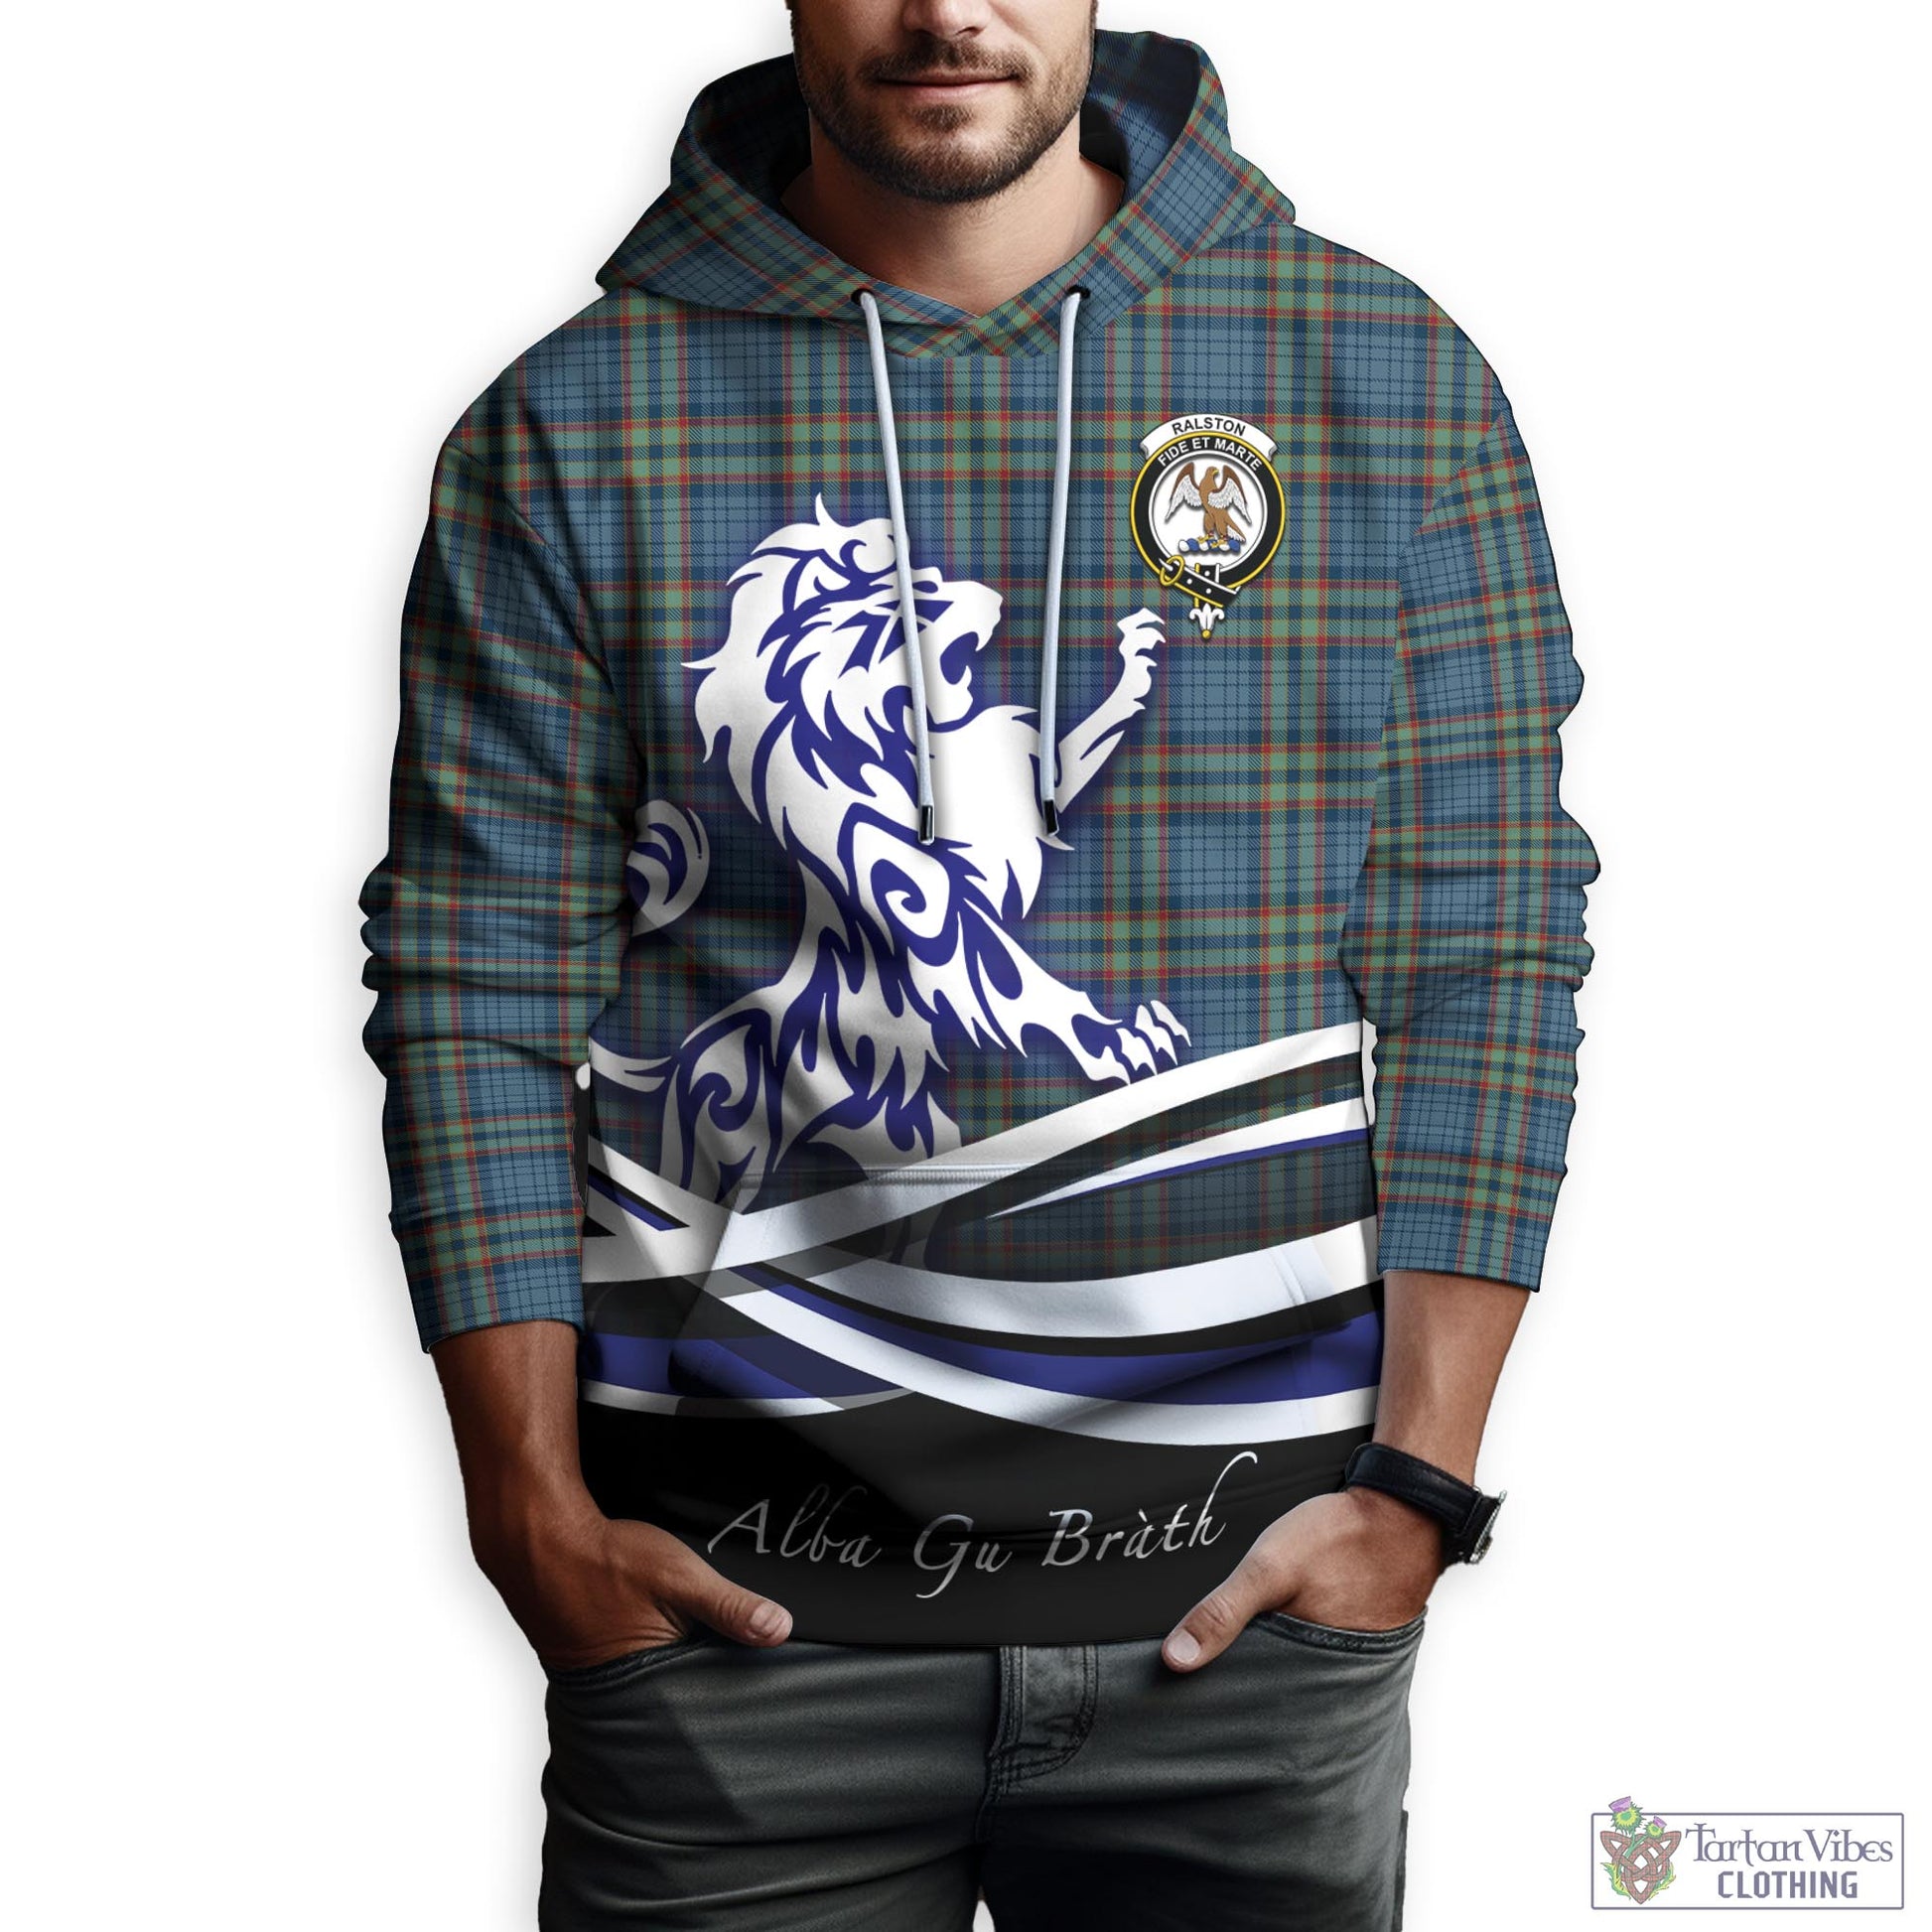 ralston-uk-tartan-hoodie-with-alba-gu-brath-regal-lion-emblem